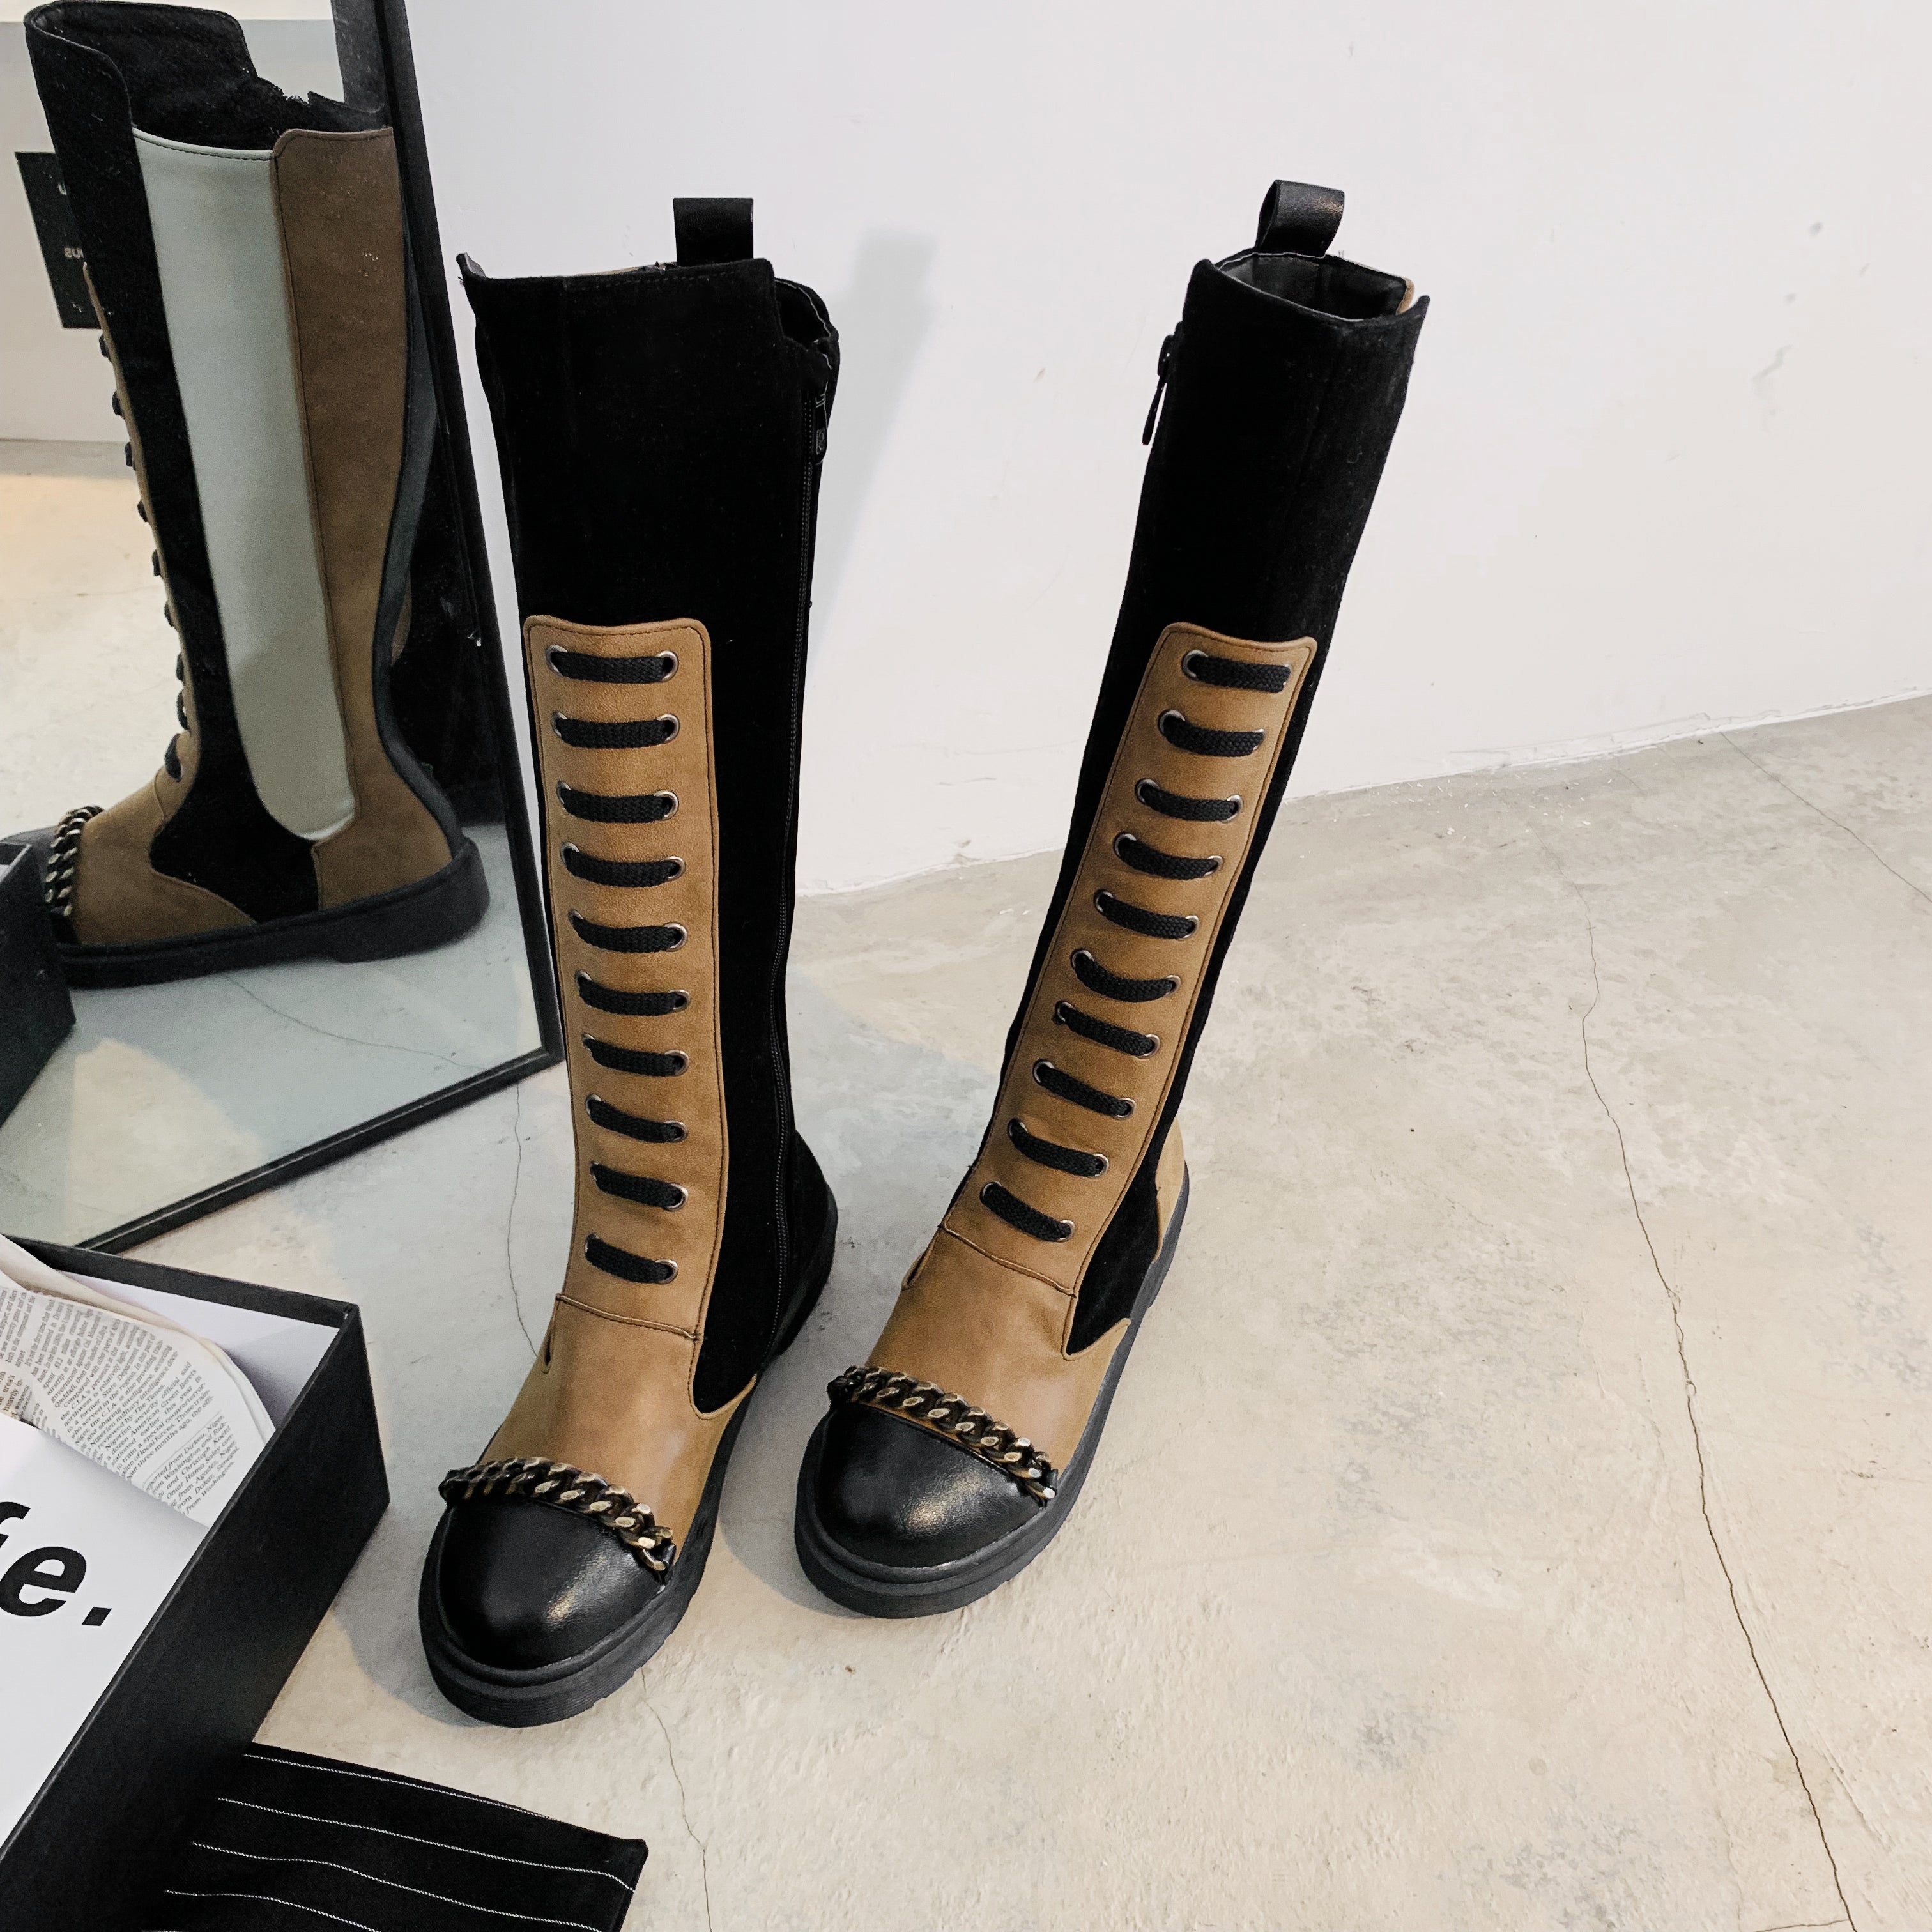 Bigsizeheels Round toe punk spliced flat boots - Brown freeshipping - bigsizeheel®-size5-size15 -All Plus Sizes Available!